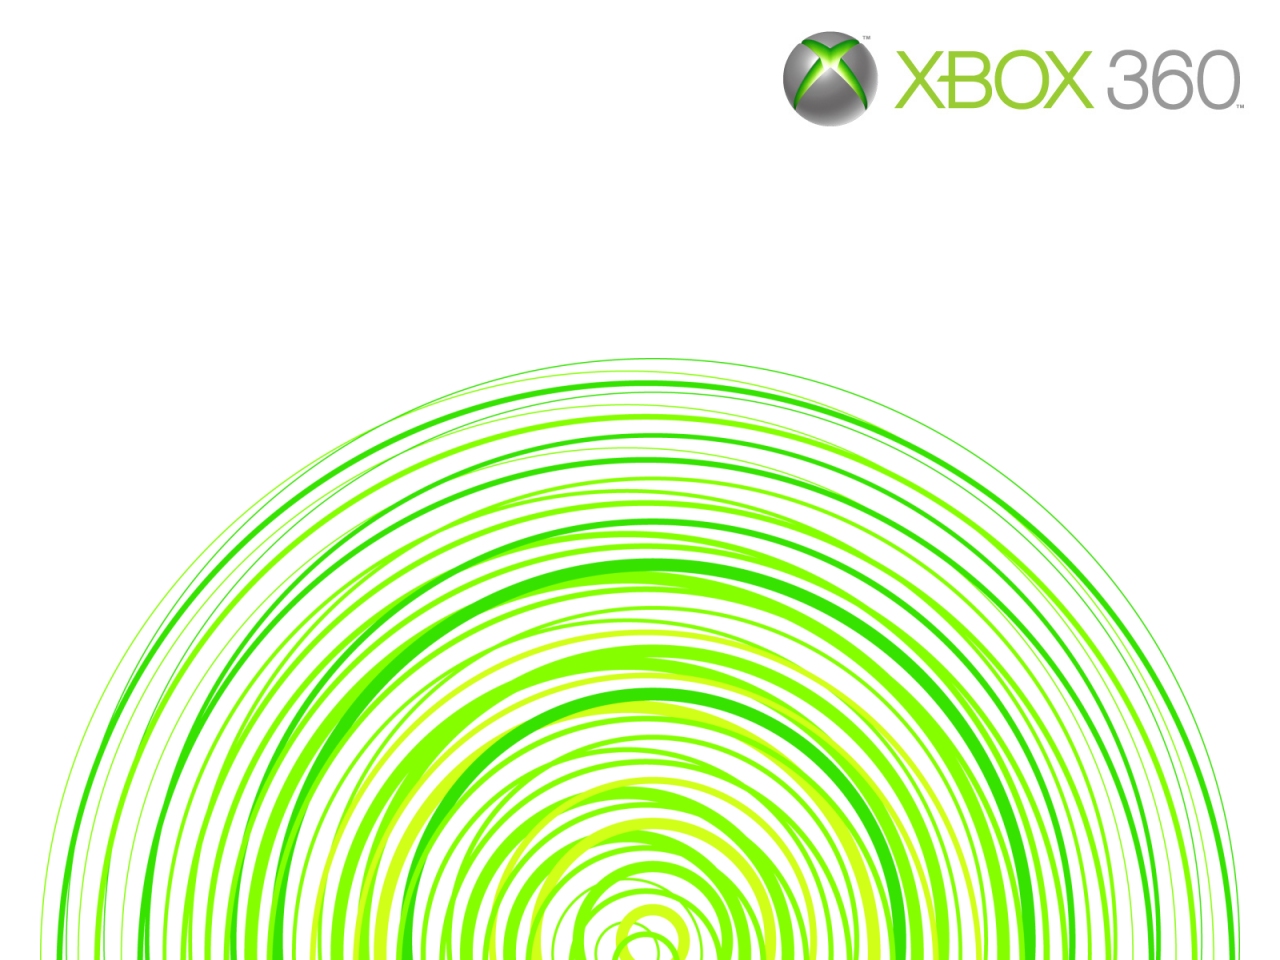 Xbox 360 Computer Wallpapers, Desktop Backgrounds | 472.93 KB | ID ...